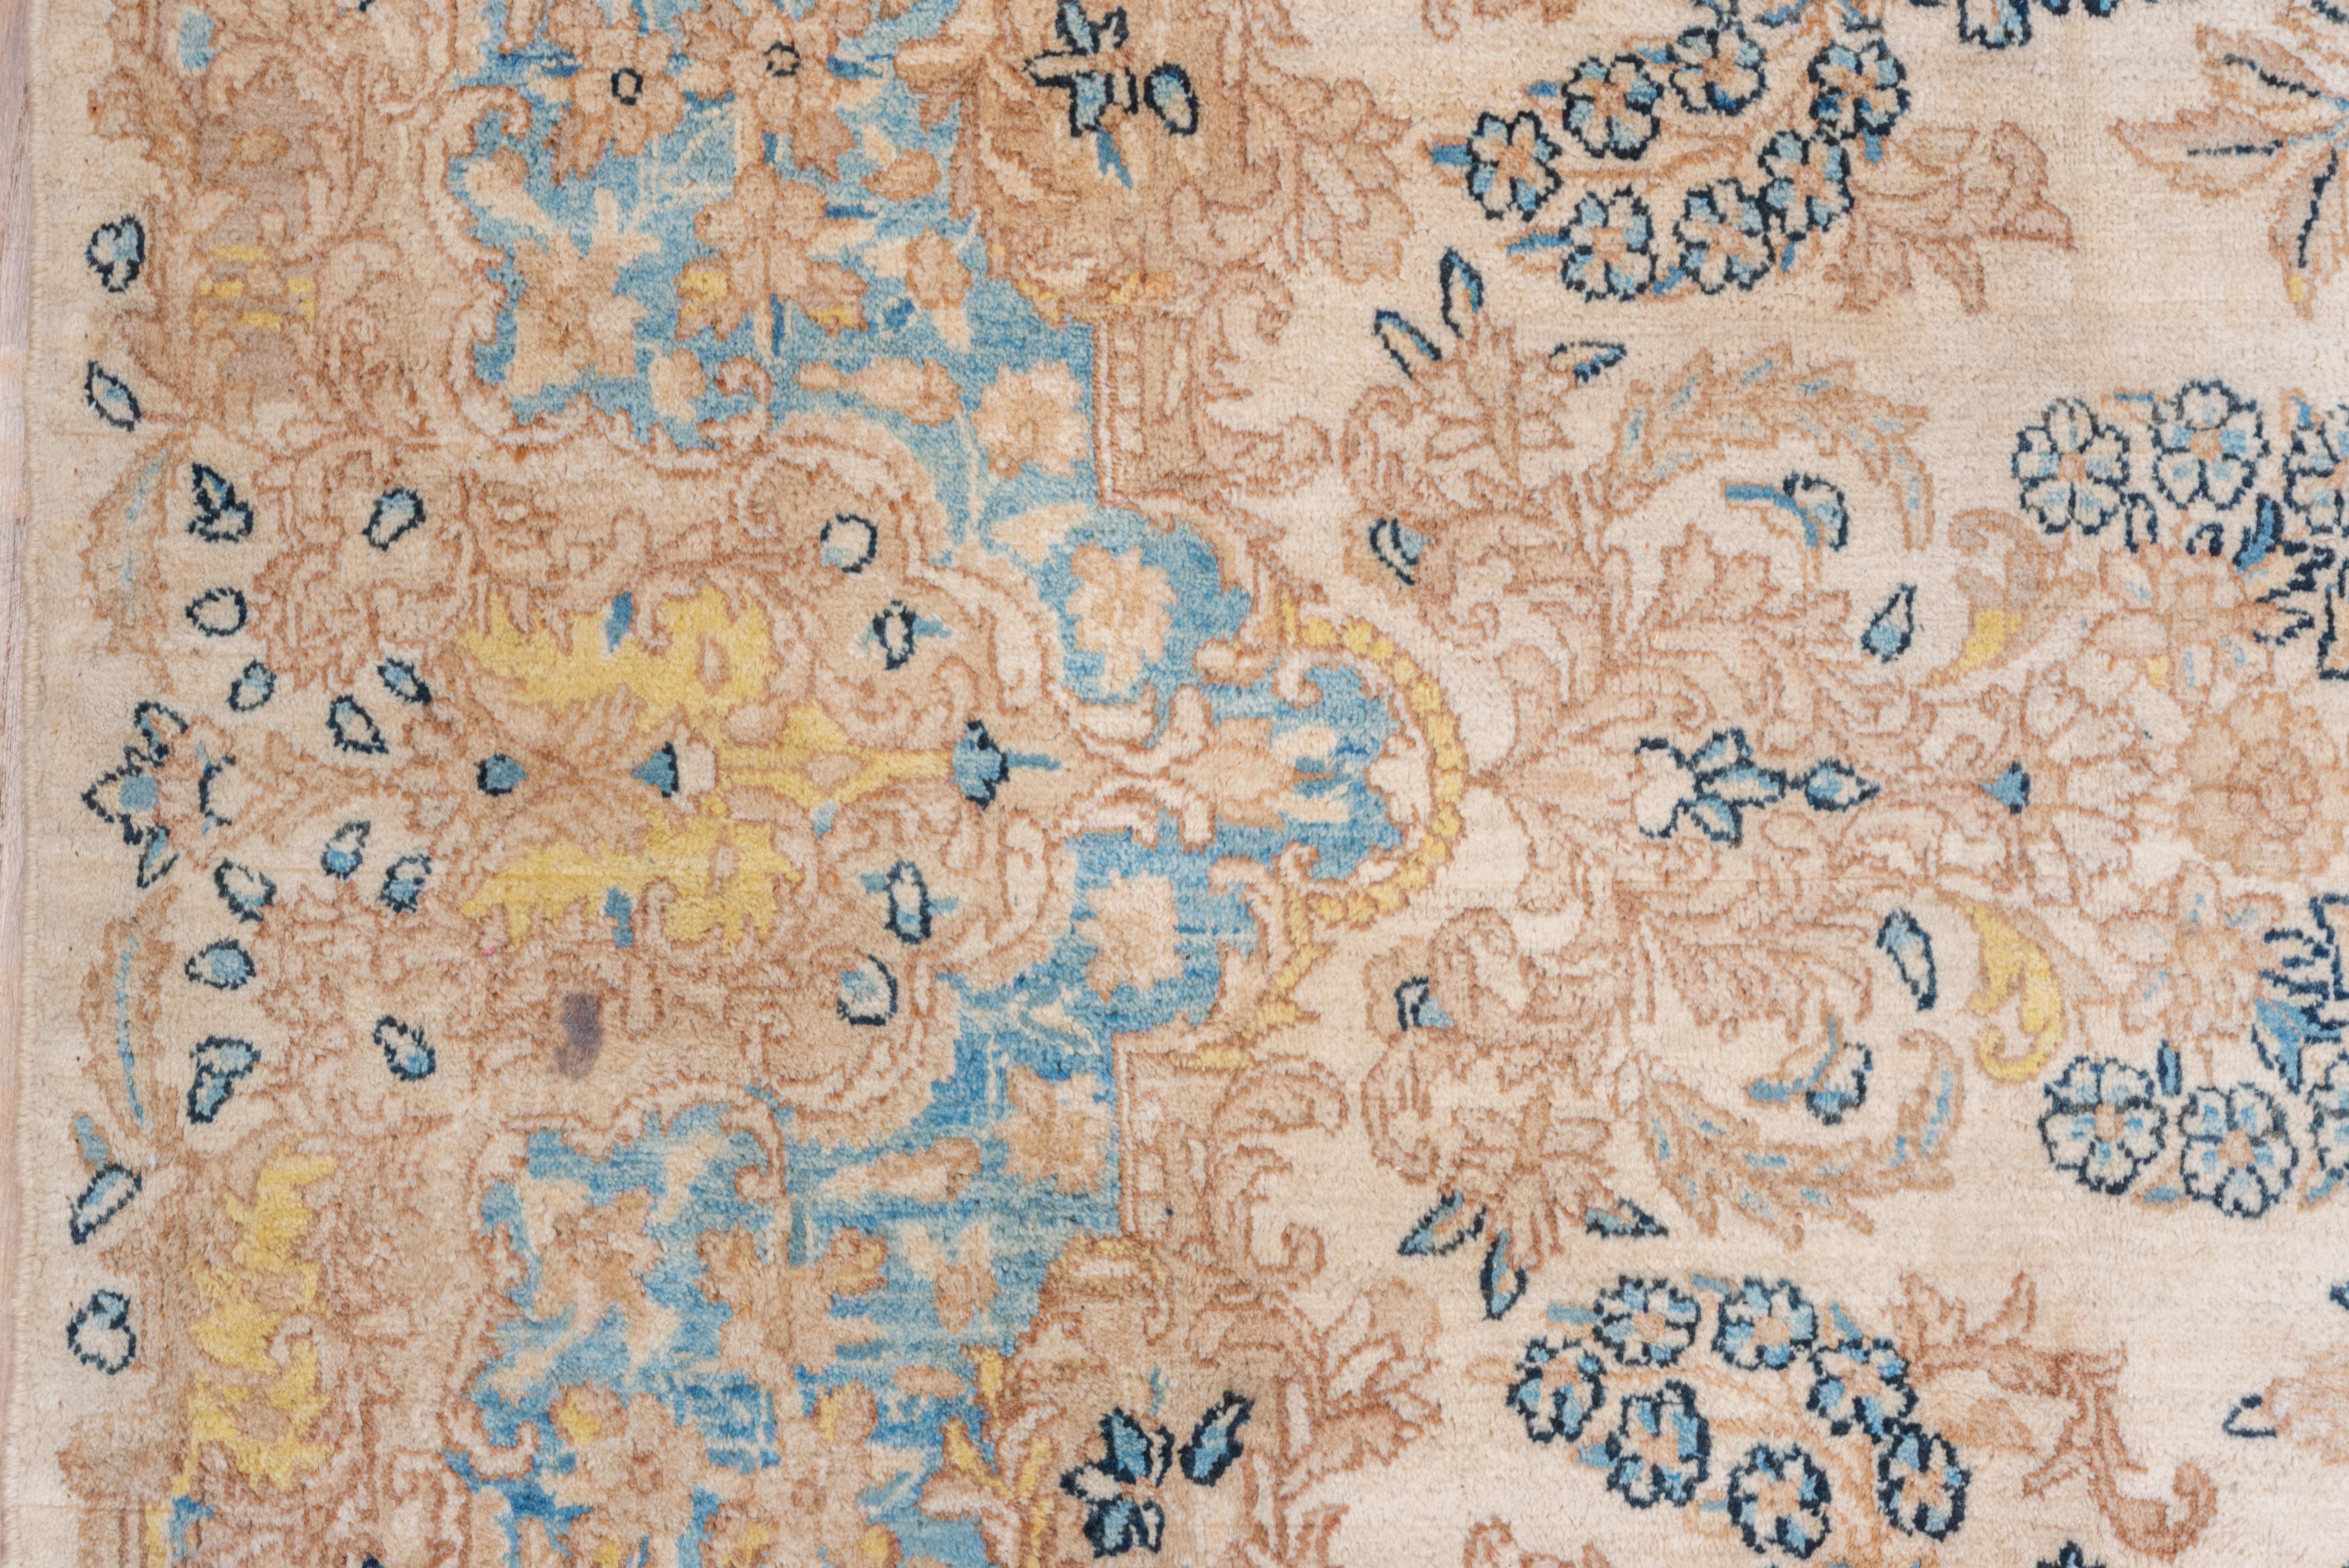 Wool Antique Neutral Persian Kerman Carpet with Light Blue & Yellows Tones